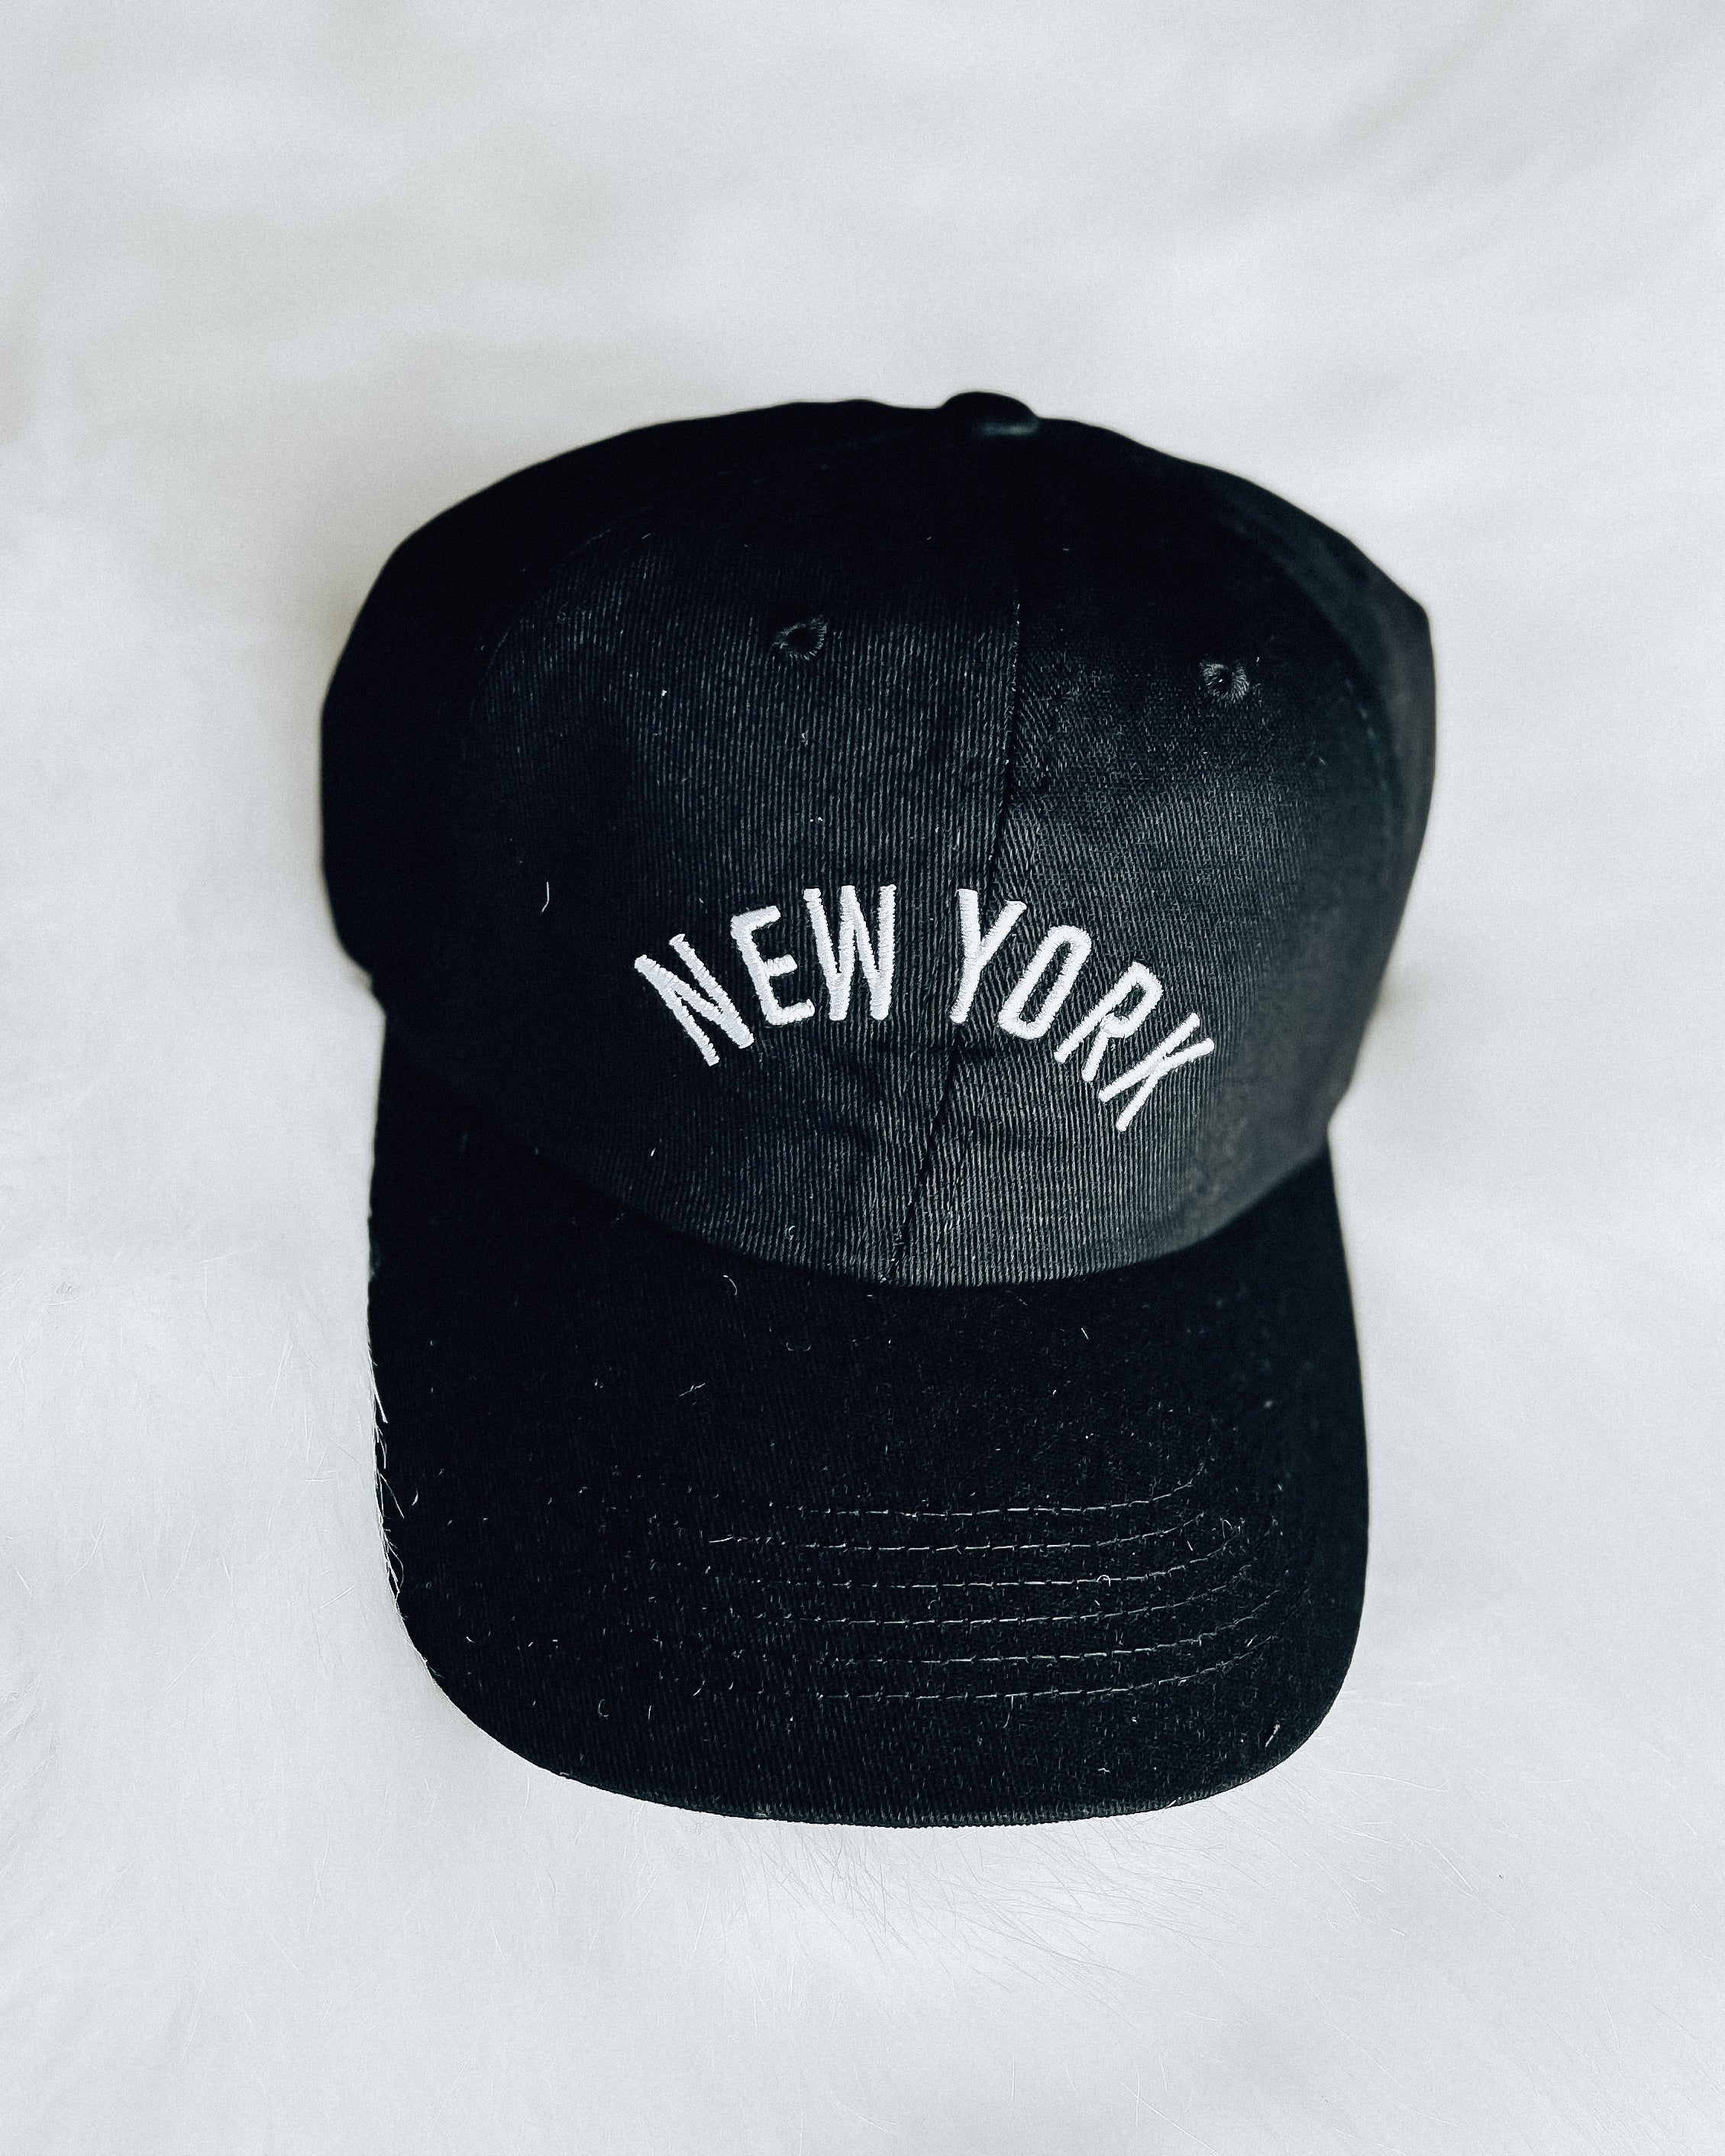 New York Baseball Cap [blk]